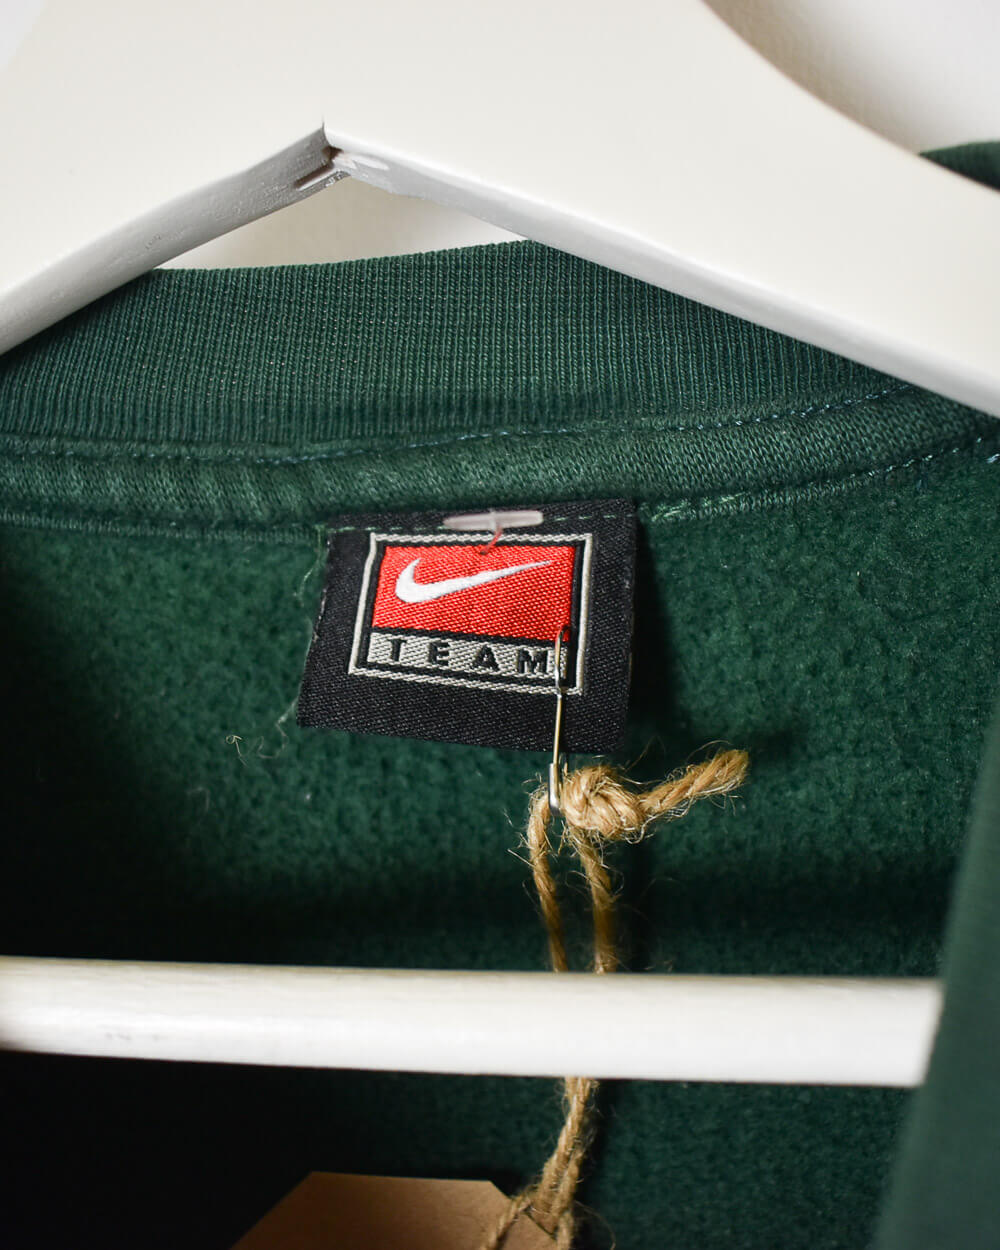 Green Nike Rework Michigan State Sweatshirt - Medium